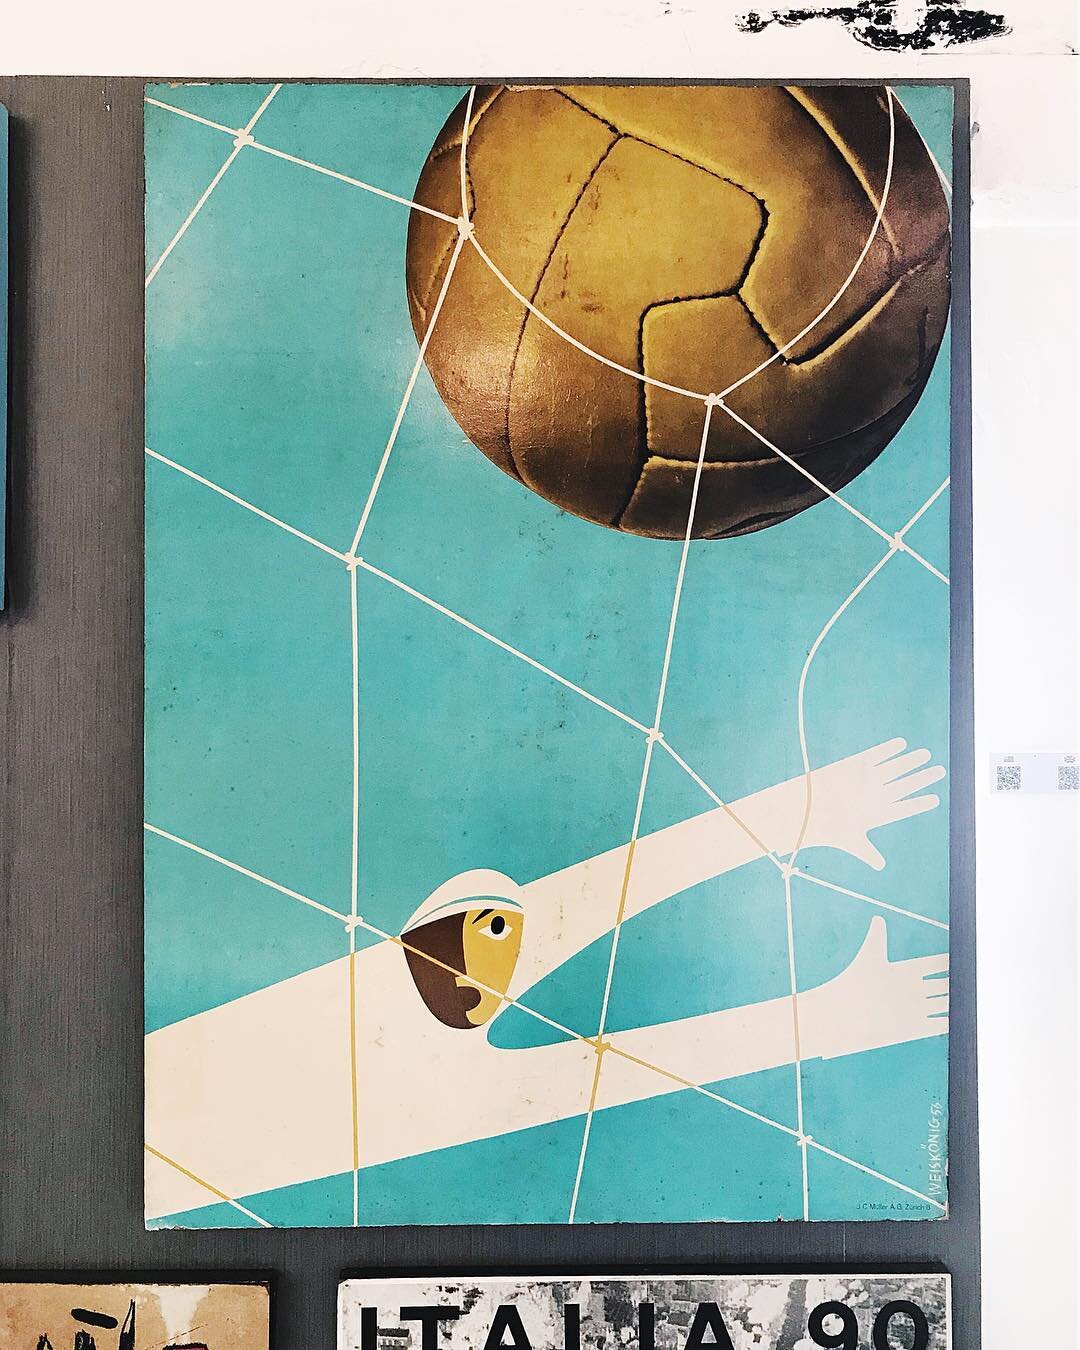 One of many amazing posters at the Estadio Centenario Museum 🇺🇾⚽😍
.
.
#WaxinAndChillaxin #Montevideo #Uruguay #EstadioCentenario #Soccer #Futbal #InternationalLanguageOfLove #Stadium #HistoricalMonument of World #Football #WorldCup #FIFAWorldCup #